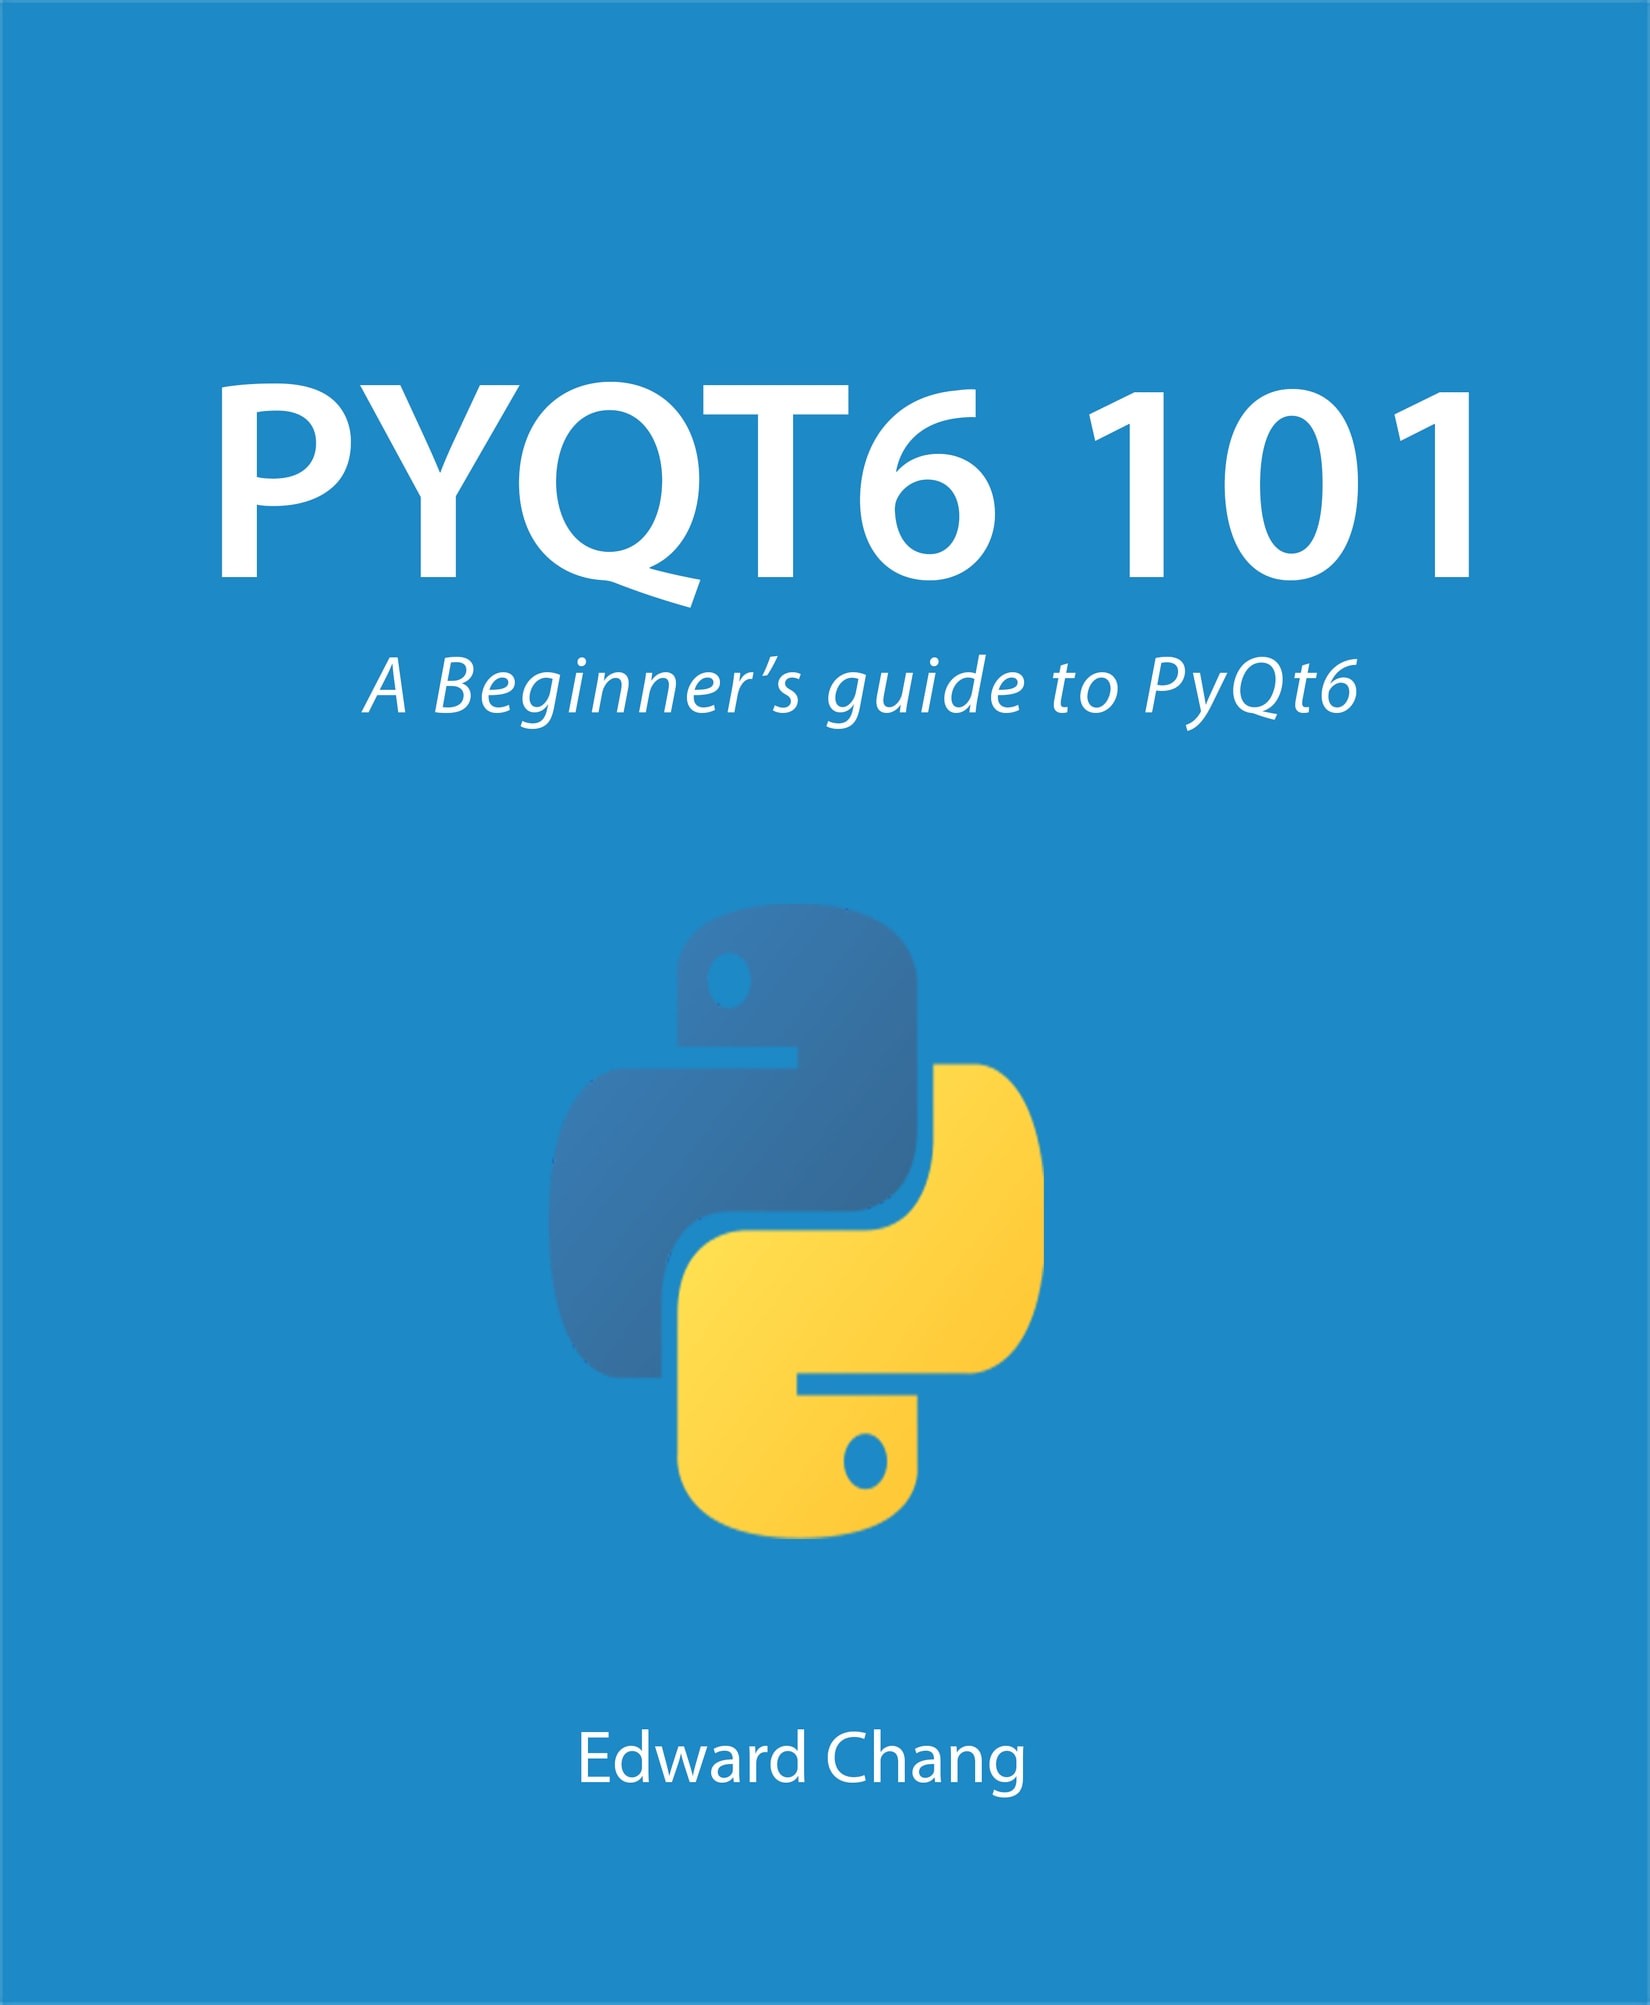 Pyqt6 101: A Beginner’s Guide to PyQt6